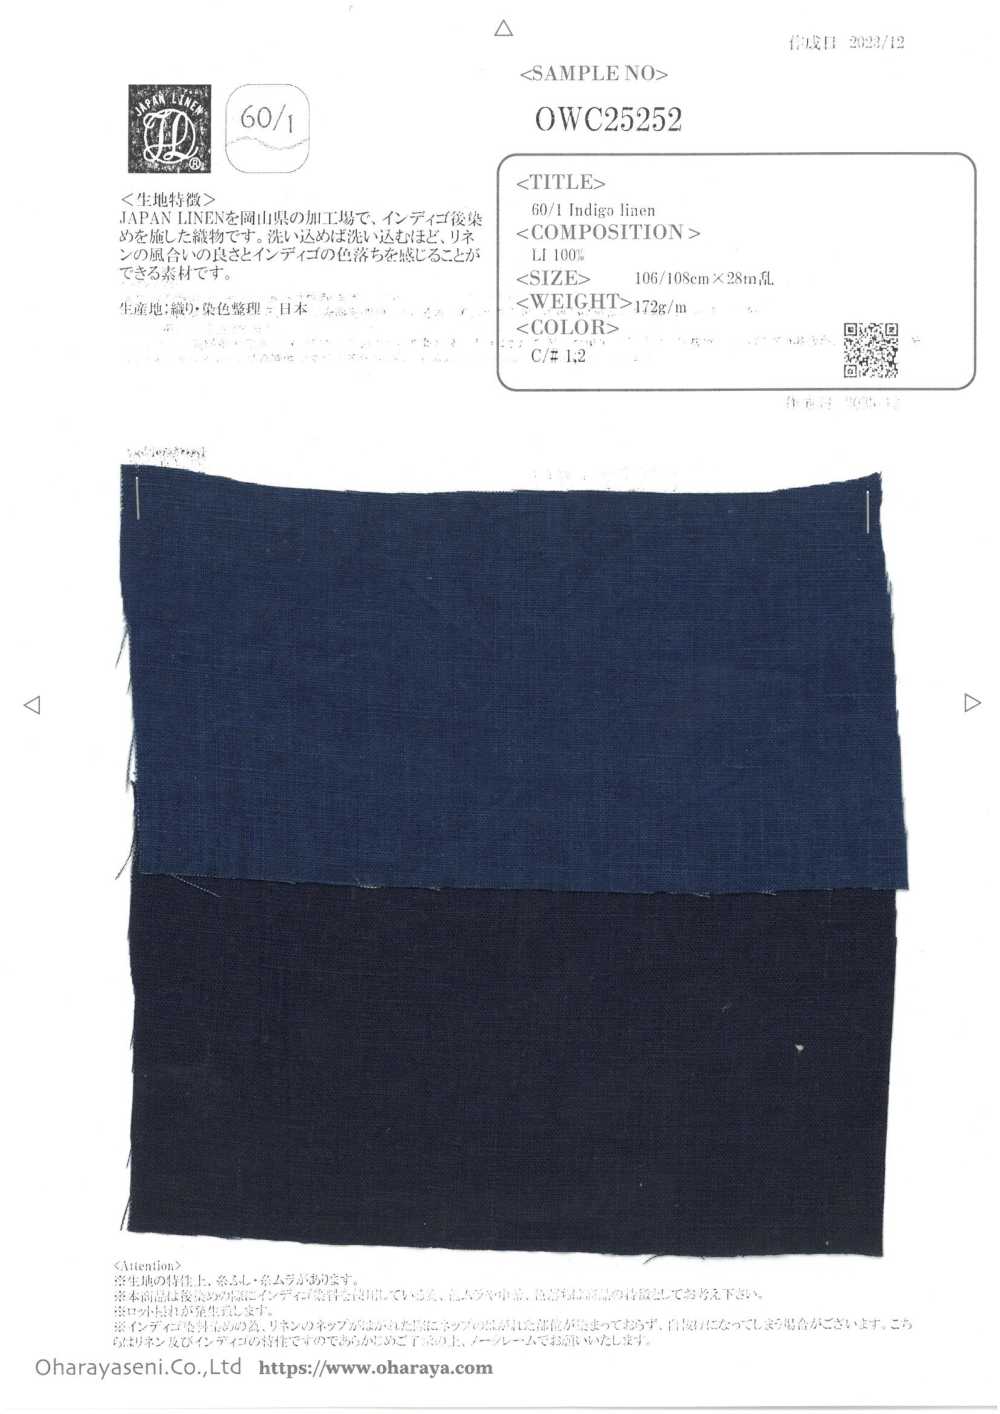 OWC25252 Lin Indigo 60/1[Fabrication De Textile] Oharayaseni